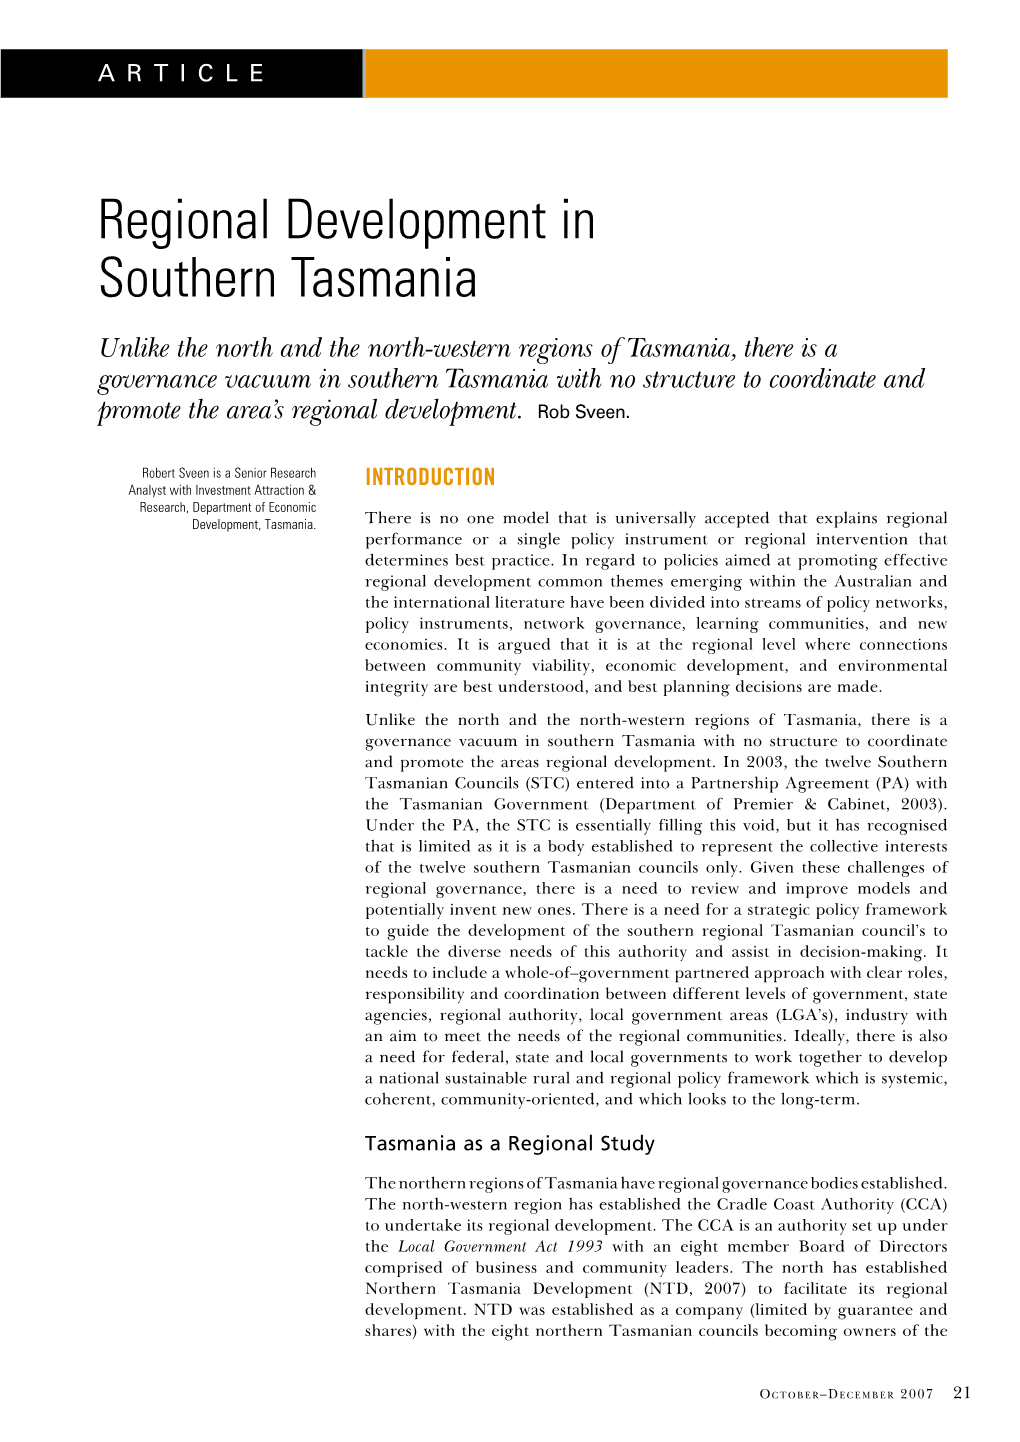 Regional Development in Southern Tasmania